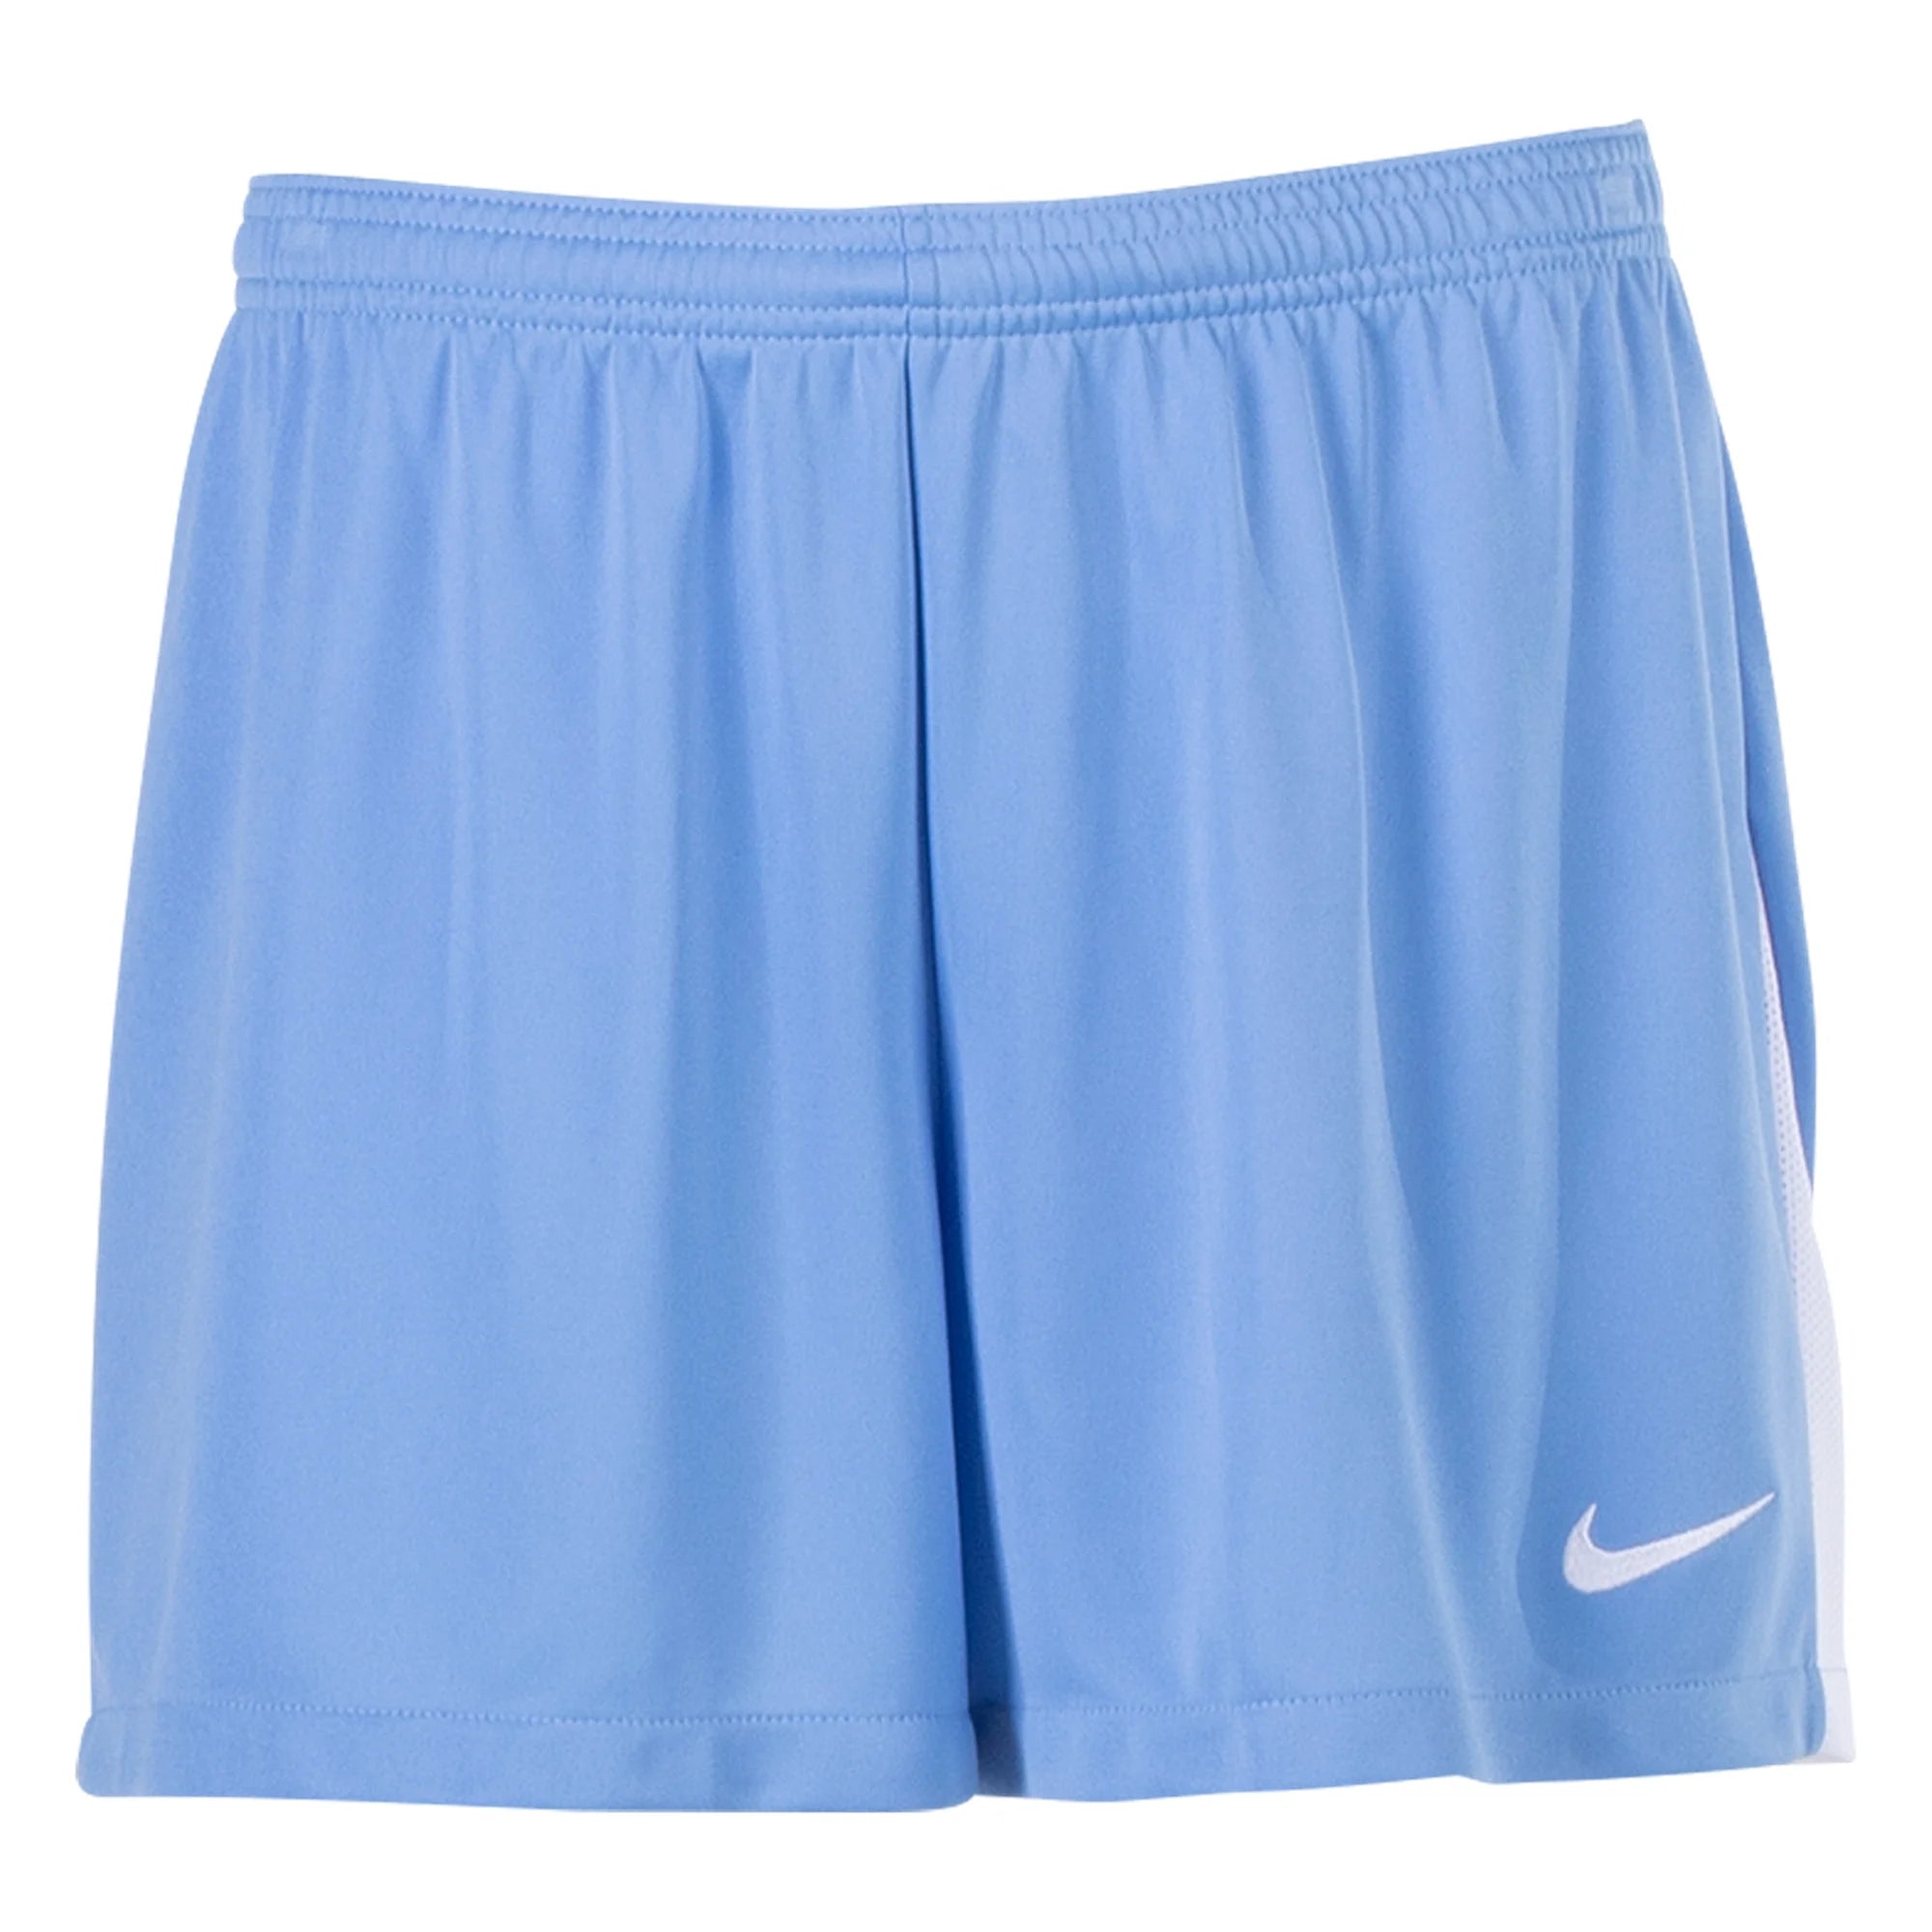 Nike Women's Classic Shorts / Sky Blue / First Colonial High